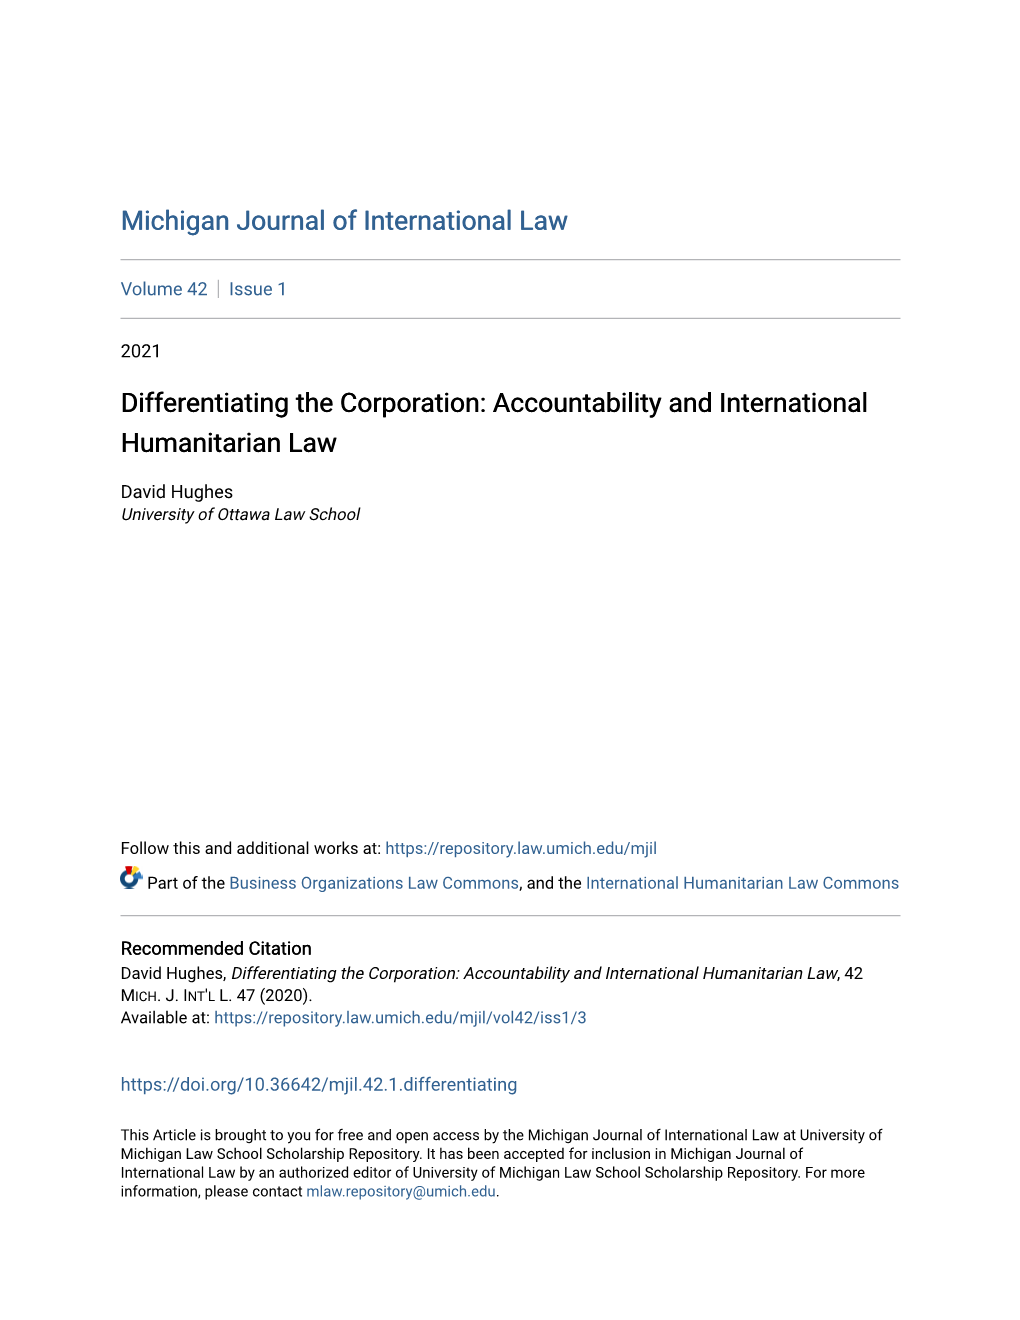 Accountability and International Humanitarian Law